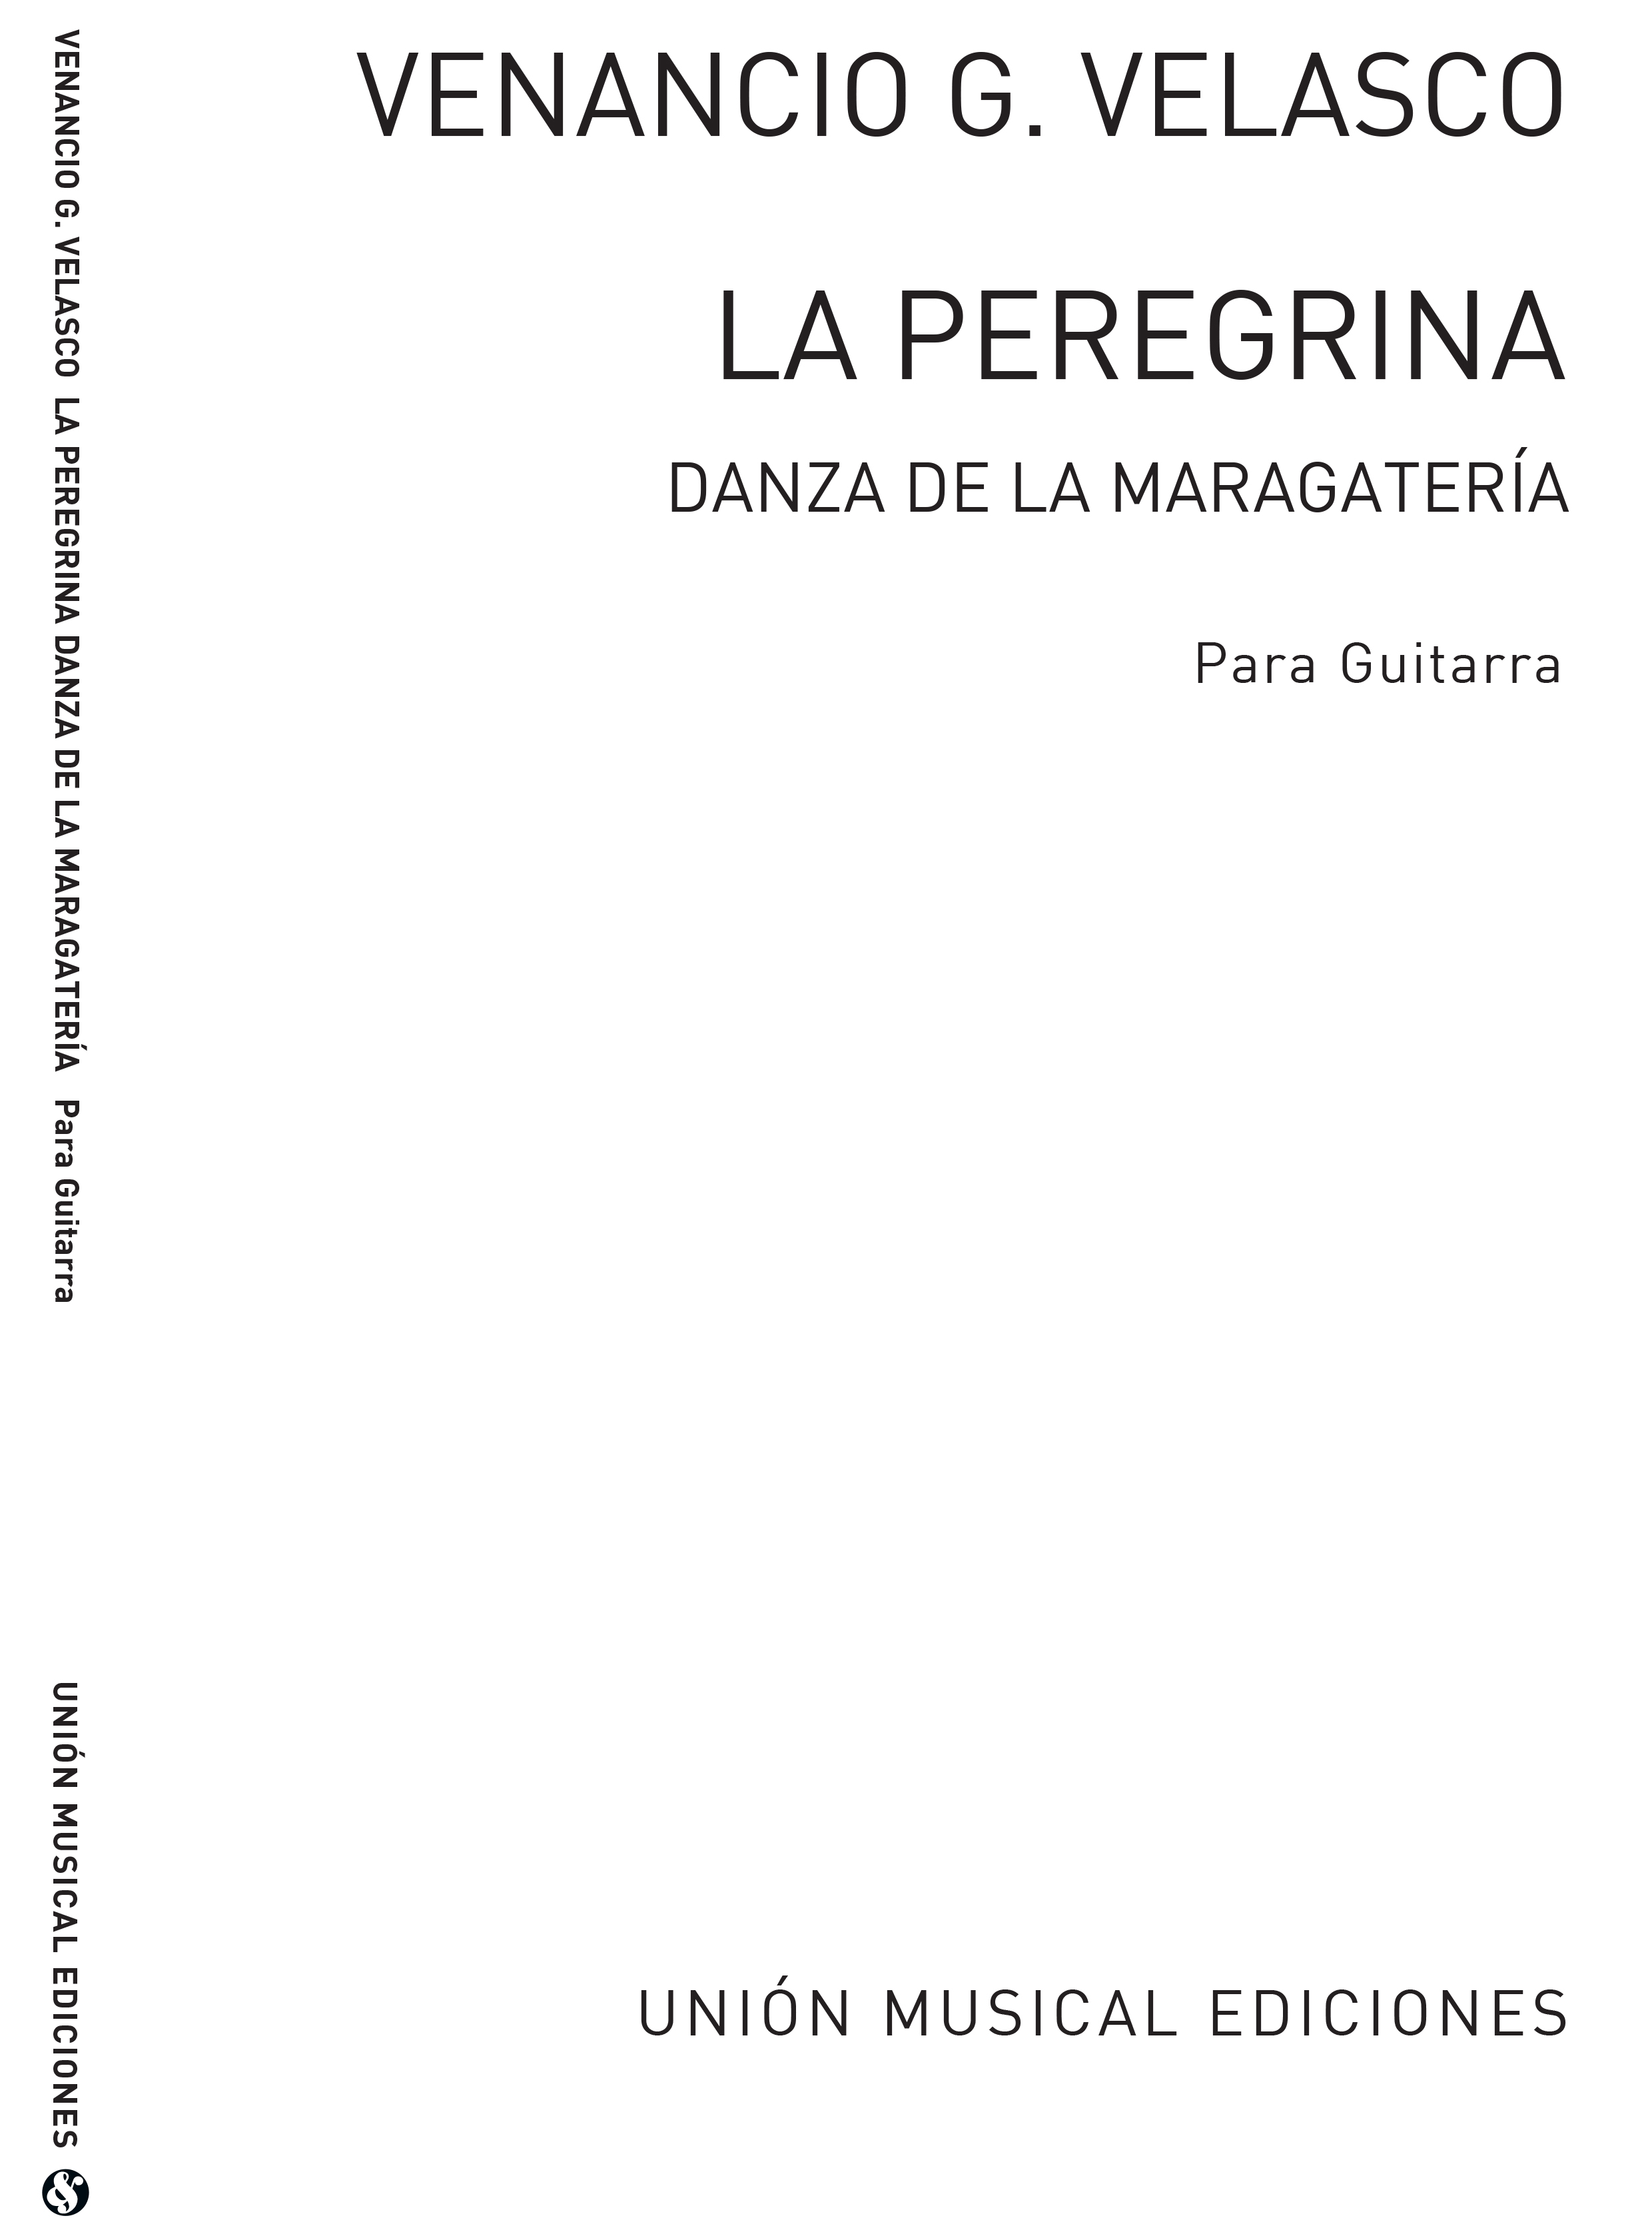 Venancio Garcia Velasco: La Peregrina  Danza Popular Maragata: Guitar: